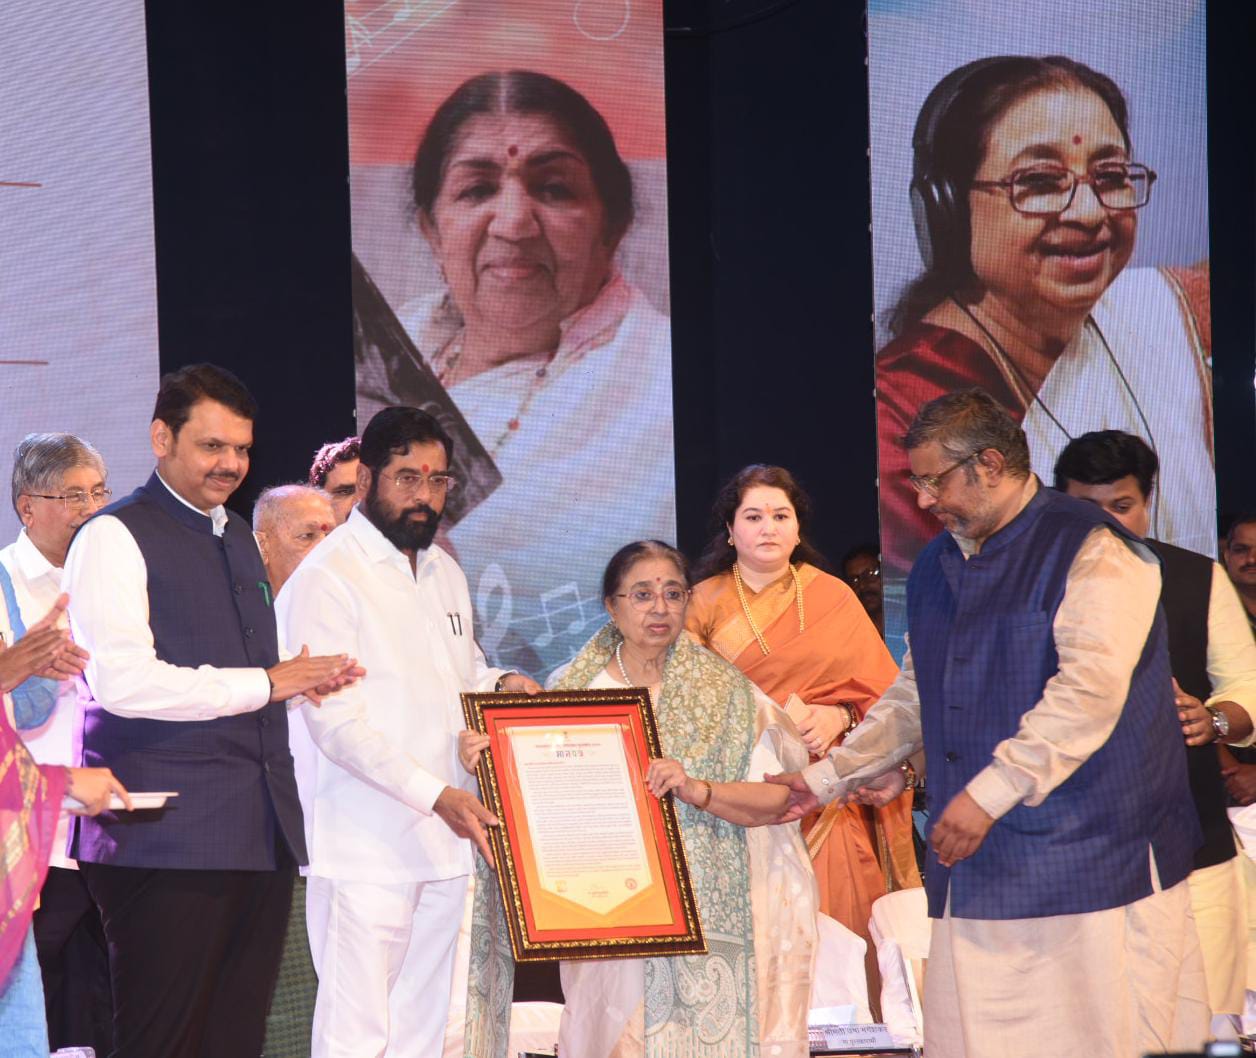 Lata Mangeshkar Award | उषा मंगेशकर आणि पं. हरिप्रसाद चौरसिया यांना गानसम्राज्ञी लता मंगेशकर पुरस्कार प्रदान  | भारतरत्न लता मंगेशकर आंतरराष्ट्रीय संगीत महाविद्यालयाचे उद्घाटन